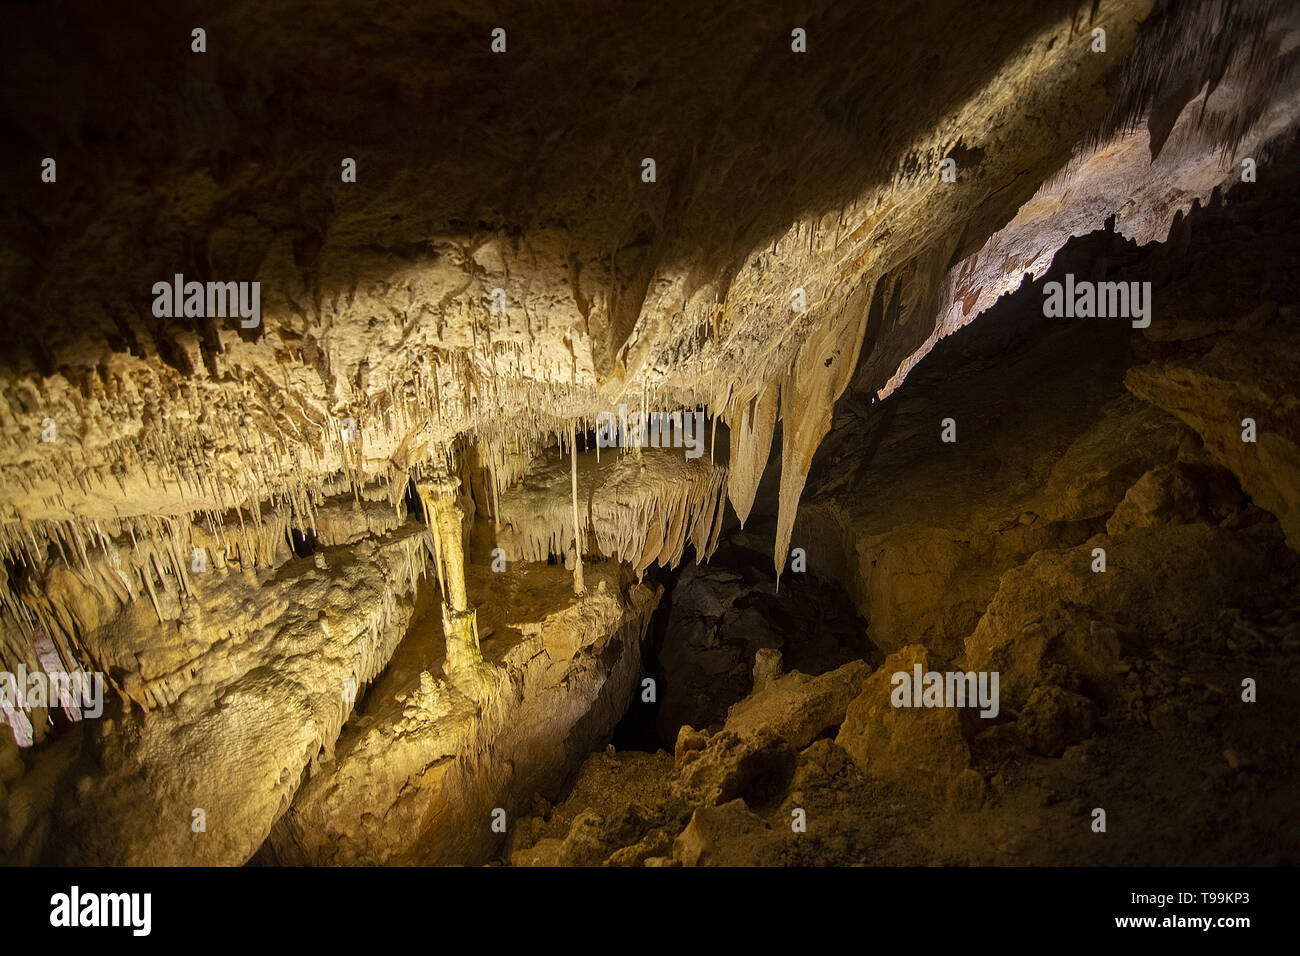 Cave interior with stalactites and stalagmites, Cuevas del Drach, Mallorca, Spain. Stock Photo